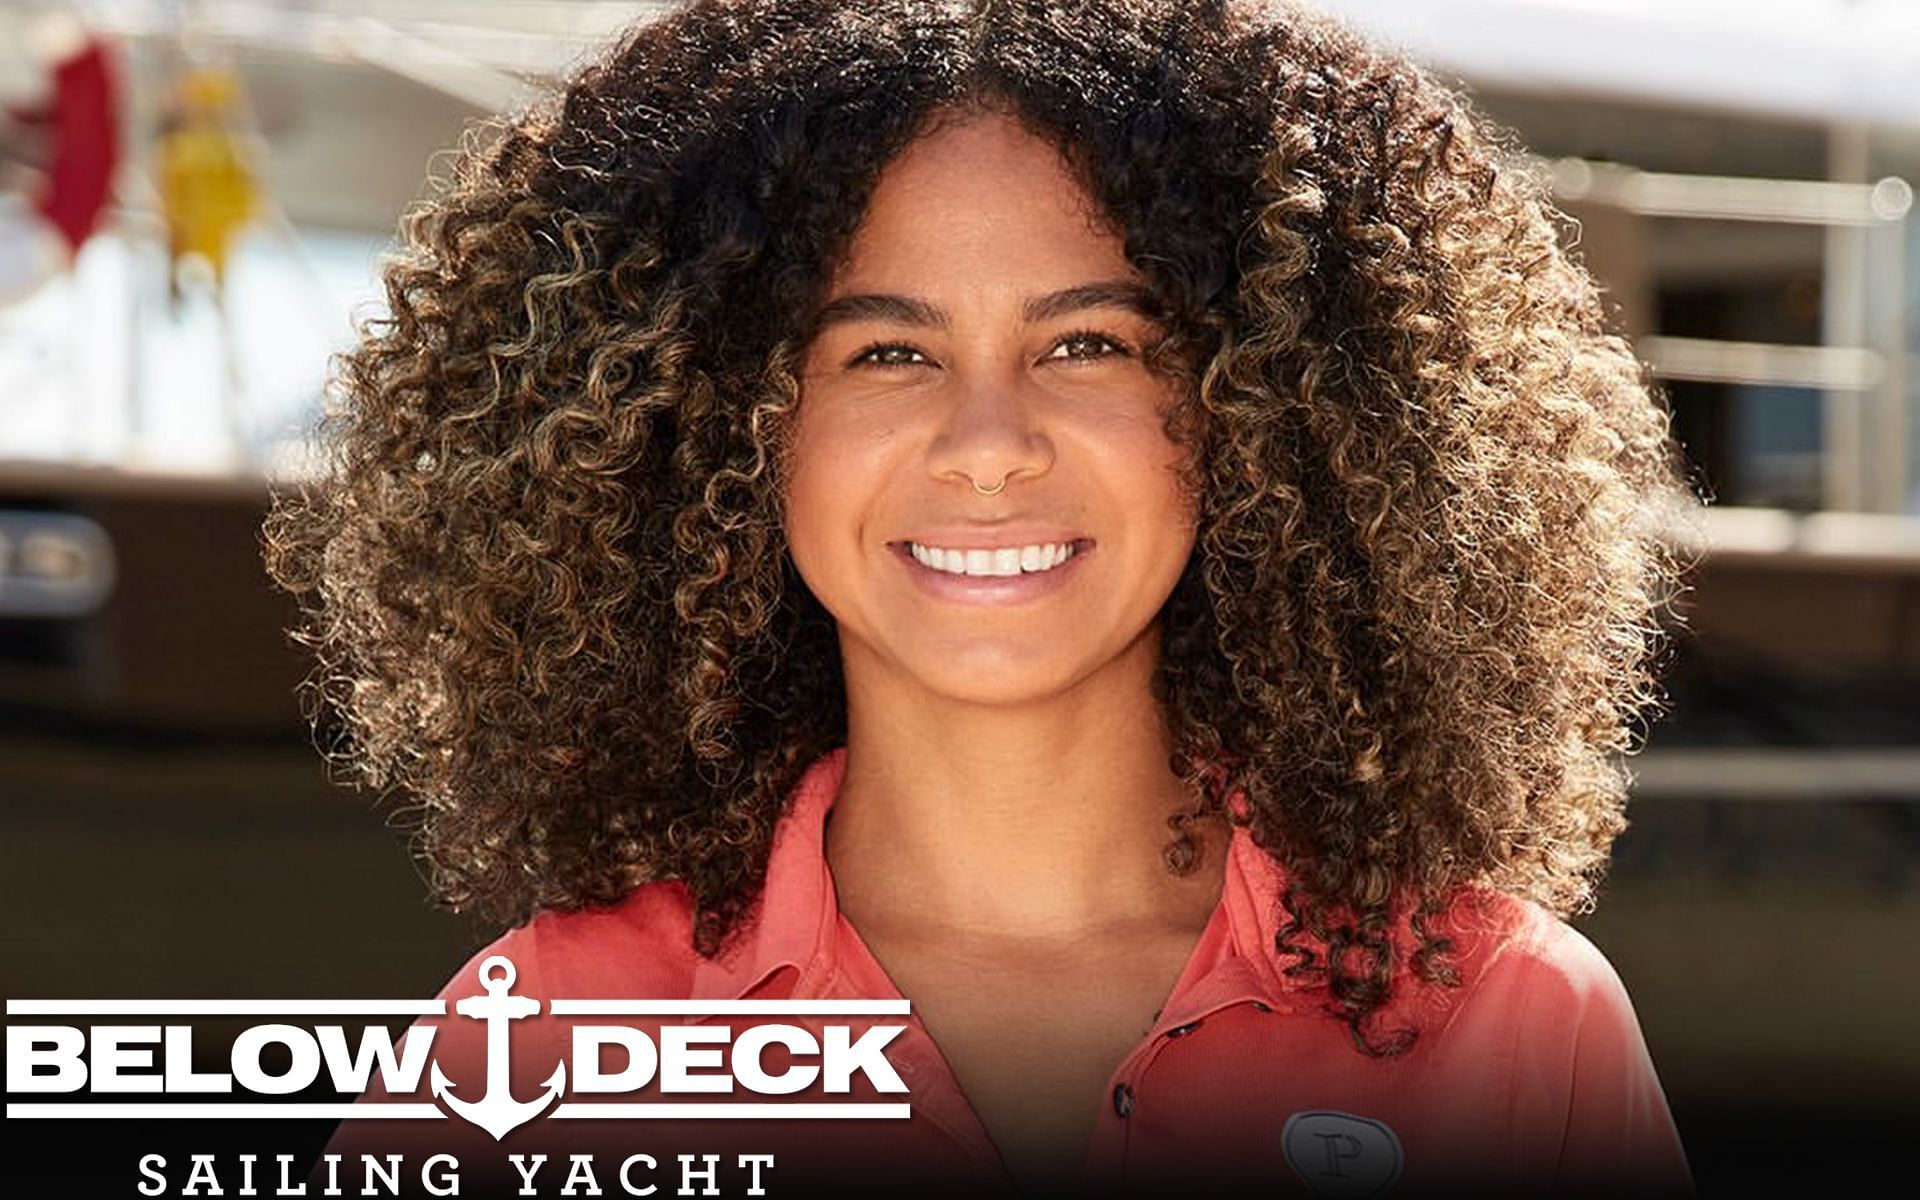 Gabriela Barragan to star in Below Deck Sailing Yacht (Image via Sportskeeda)